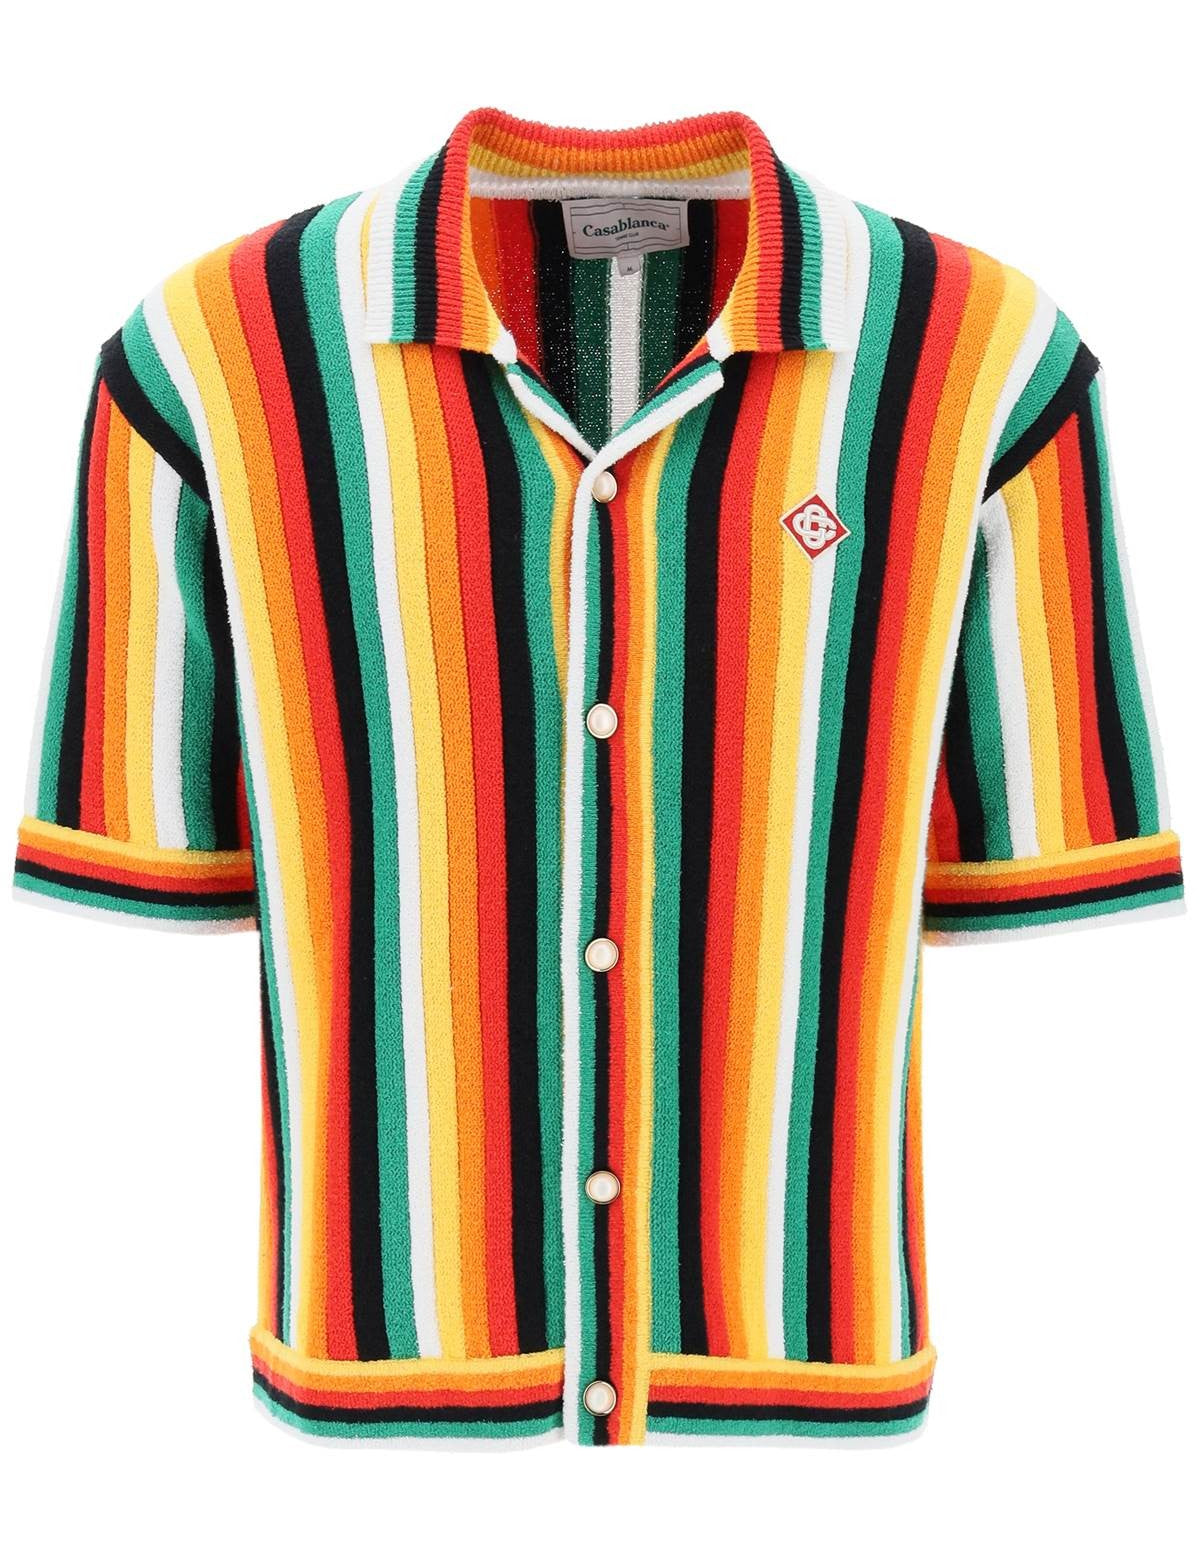 casablanca-striped-knit-bowling-shirt-with-nine-words.jpg